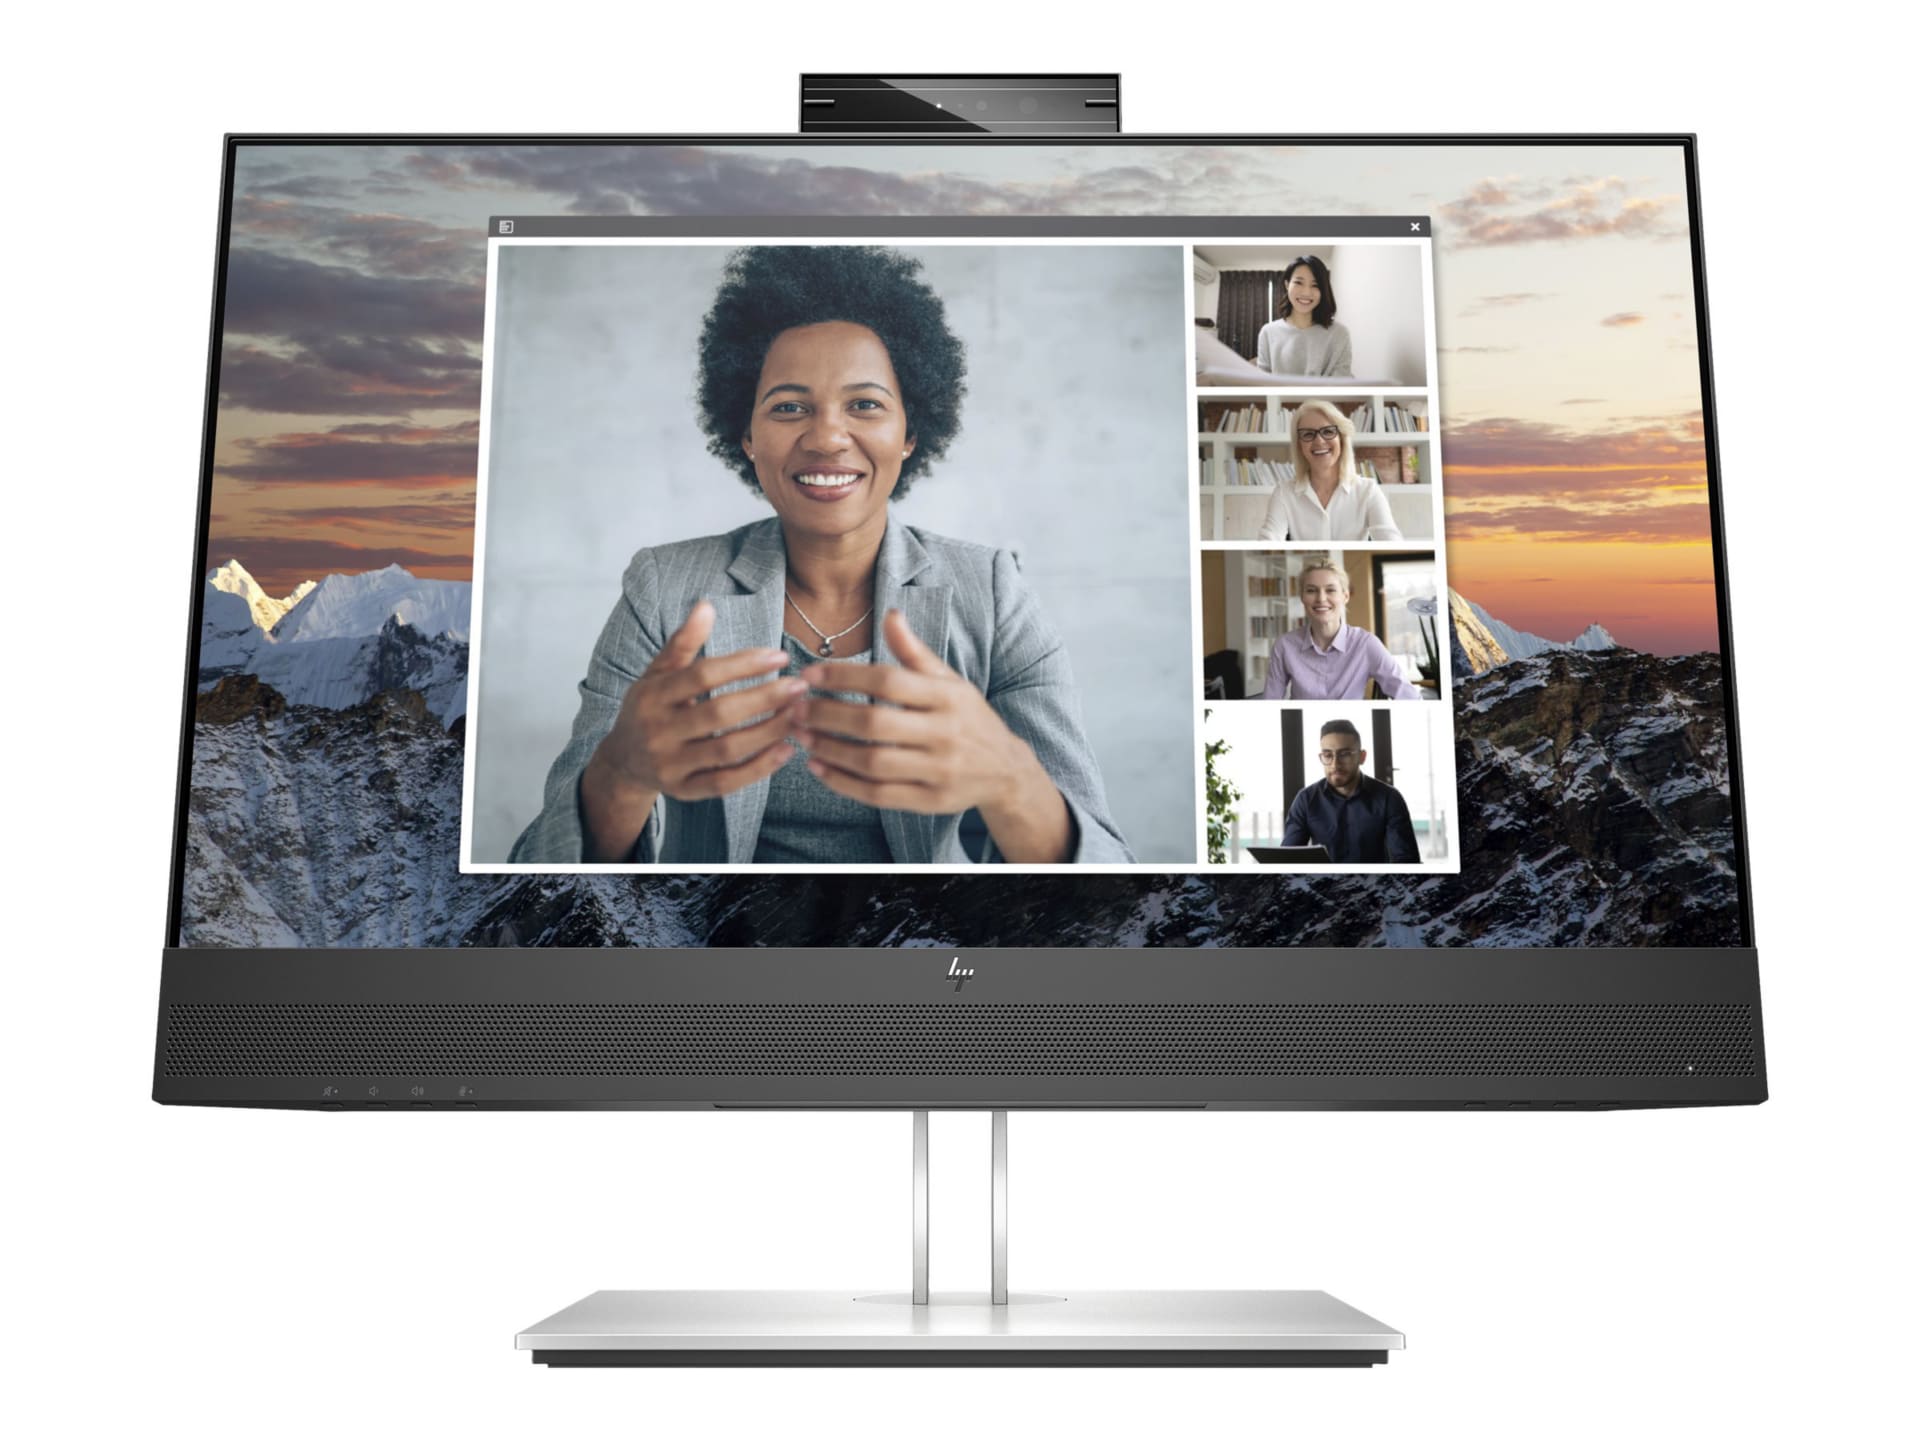 HP E24m G4 24" Class Webcam Full HD LCD Monitor - 16:9 - Black, Silver